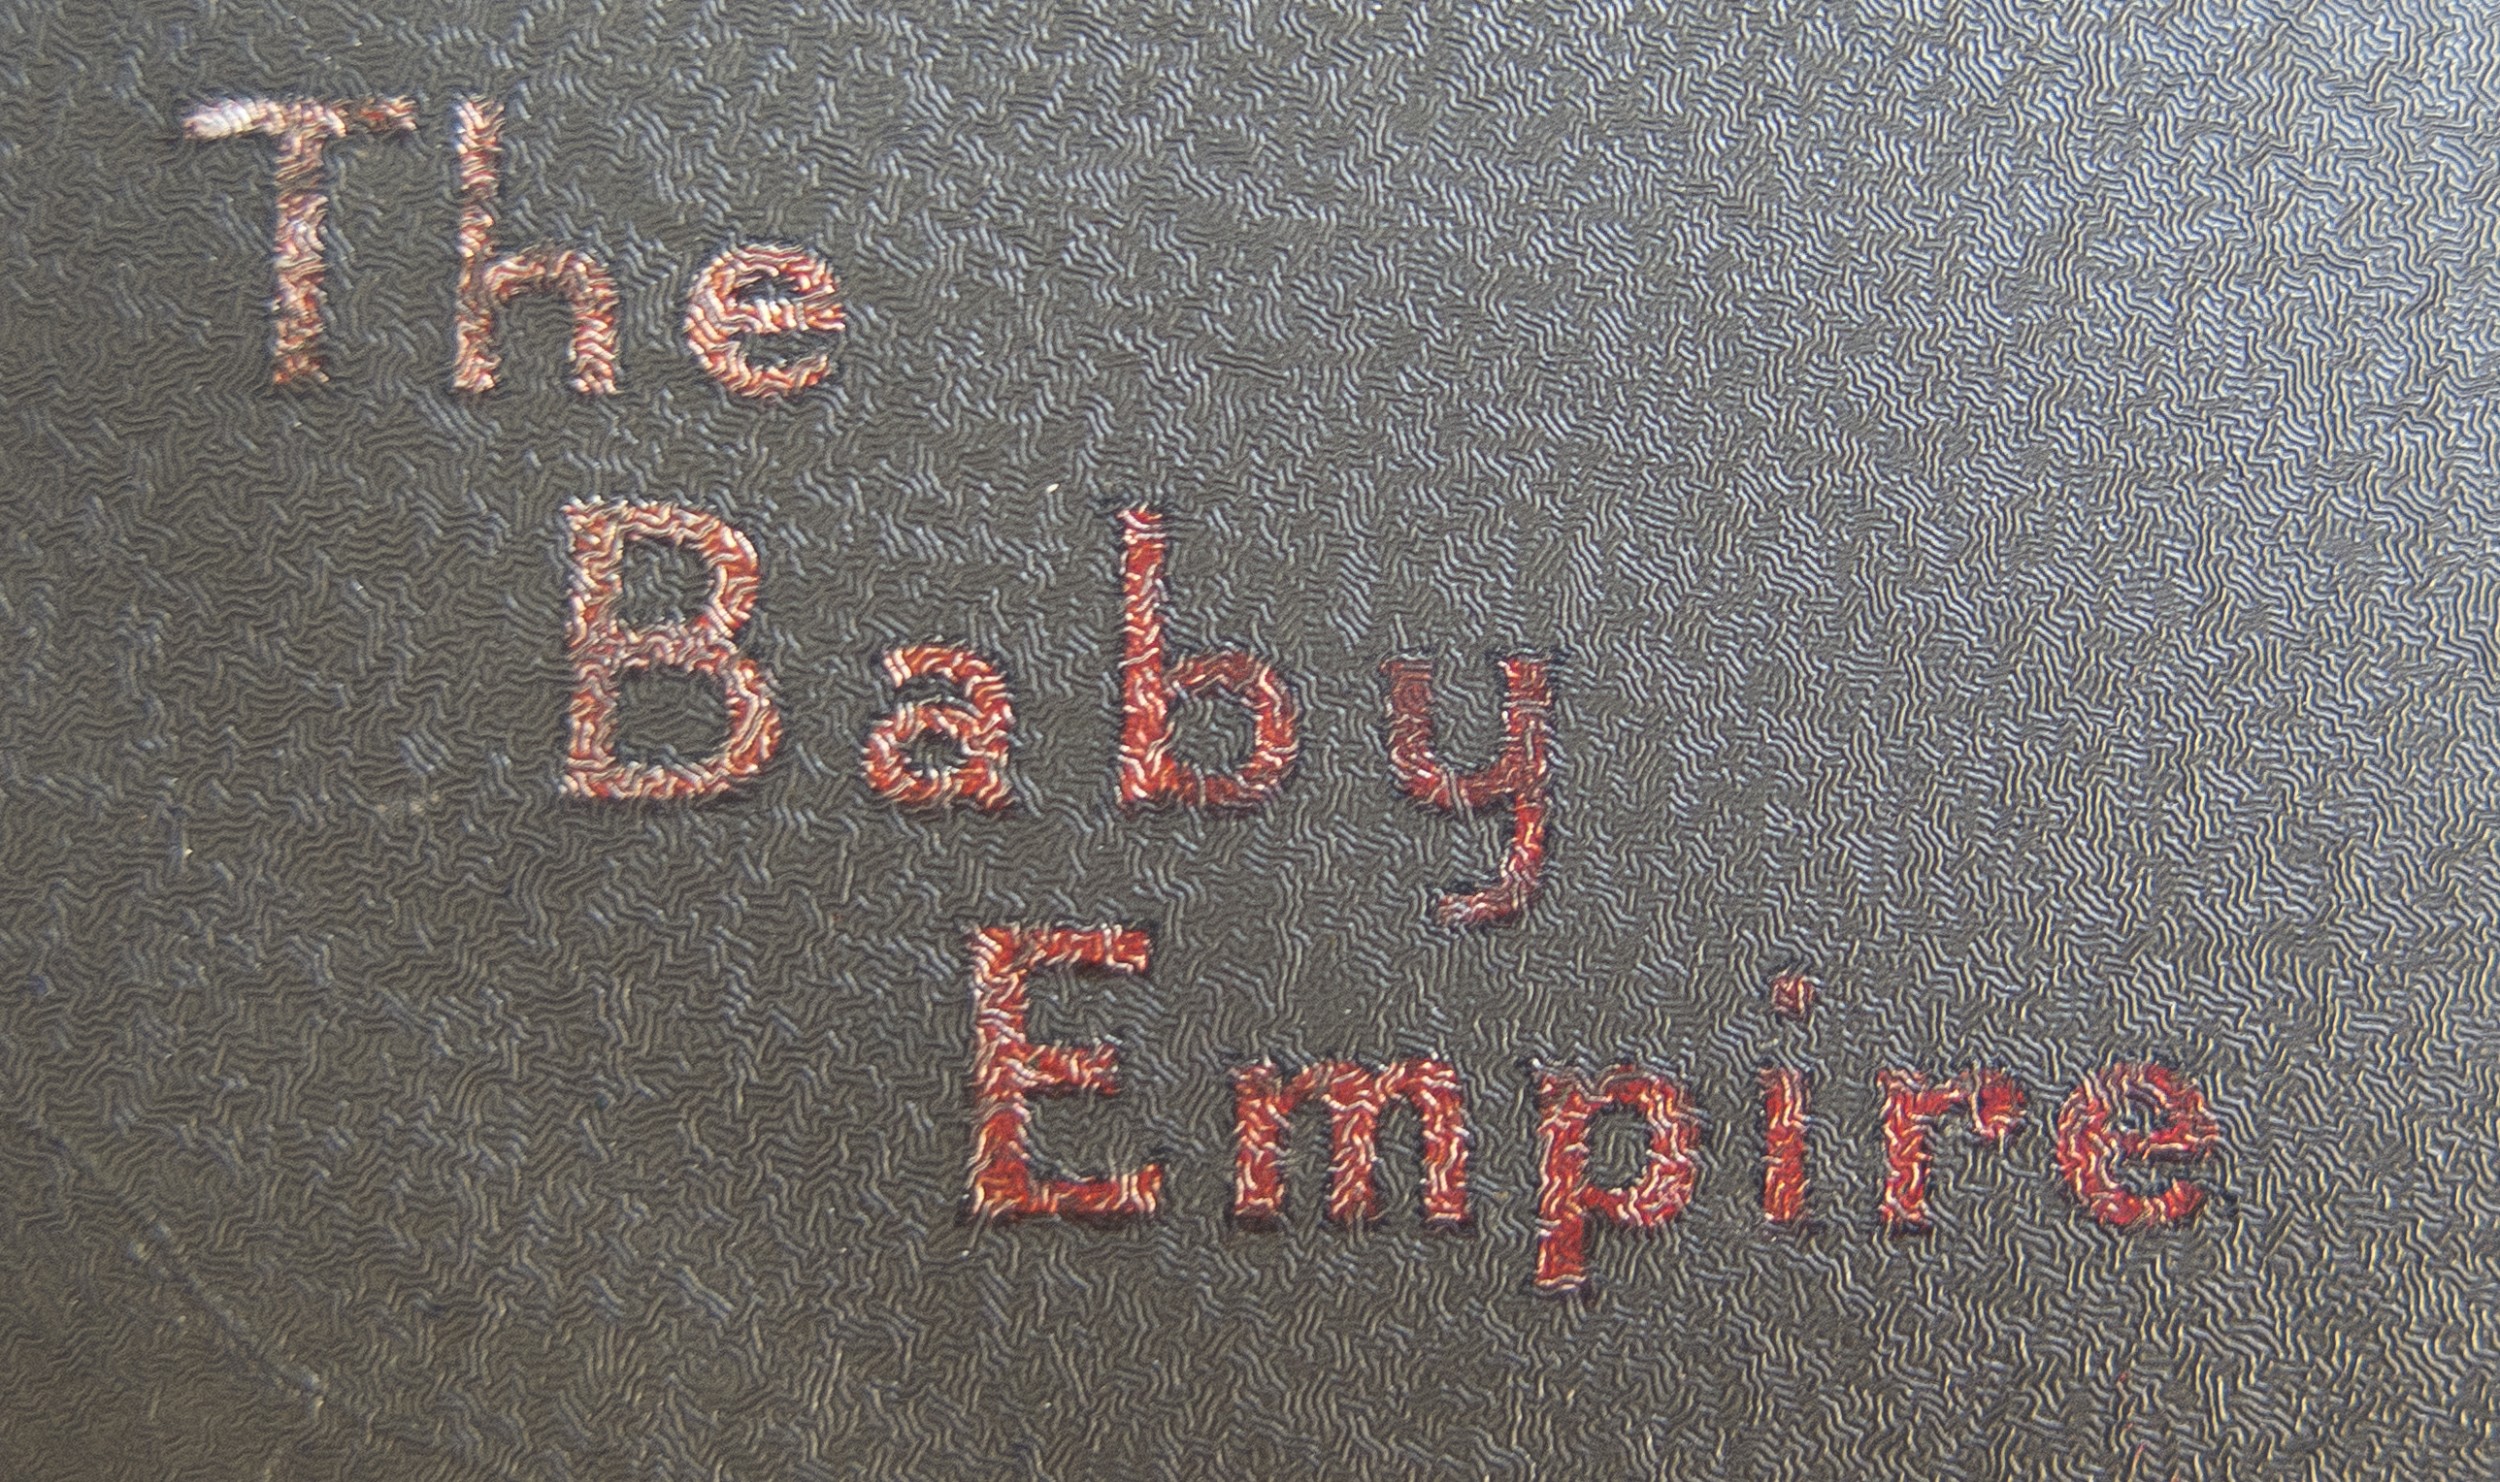 The Baby Empire